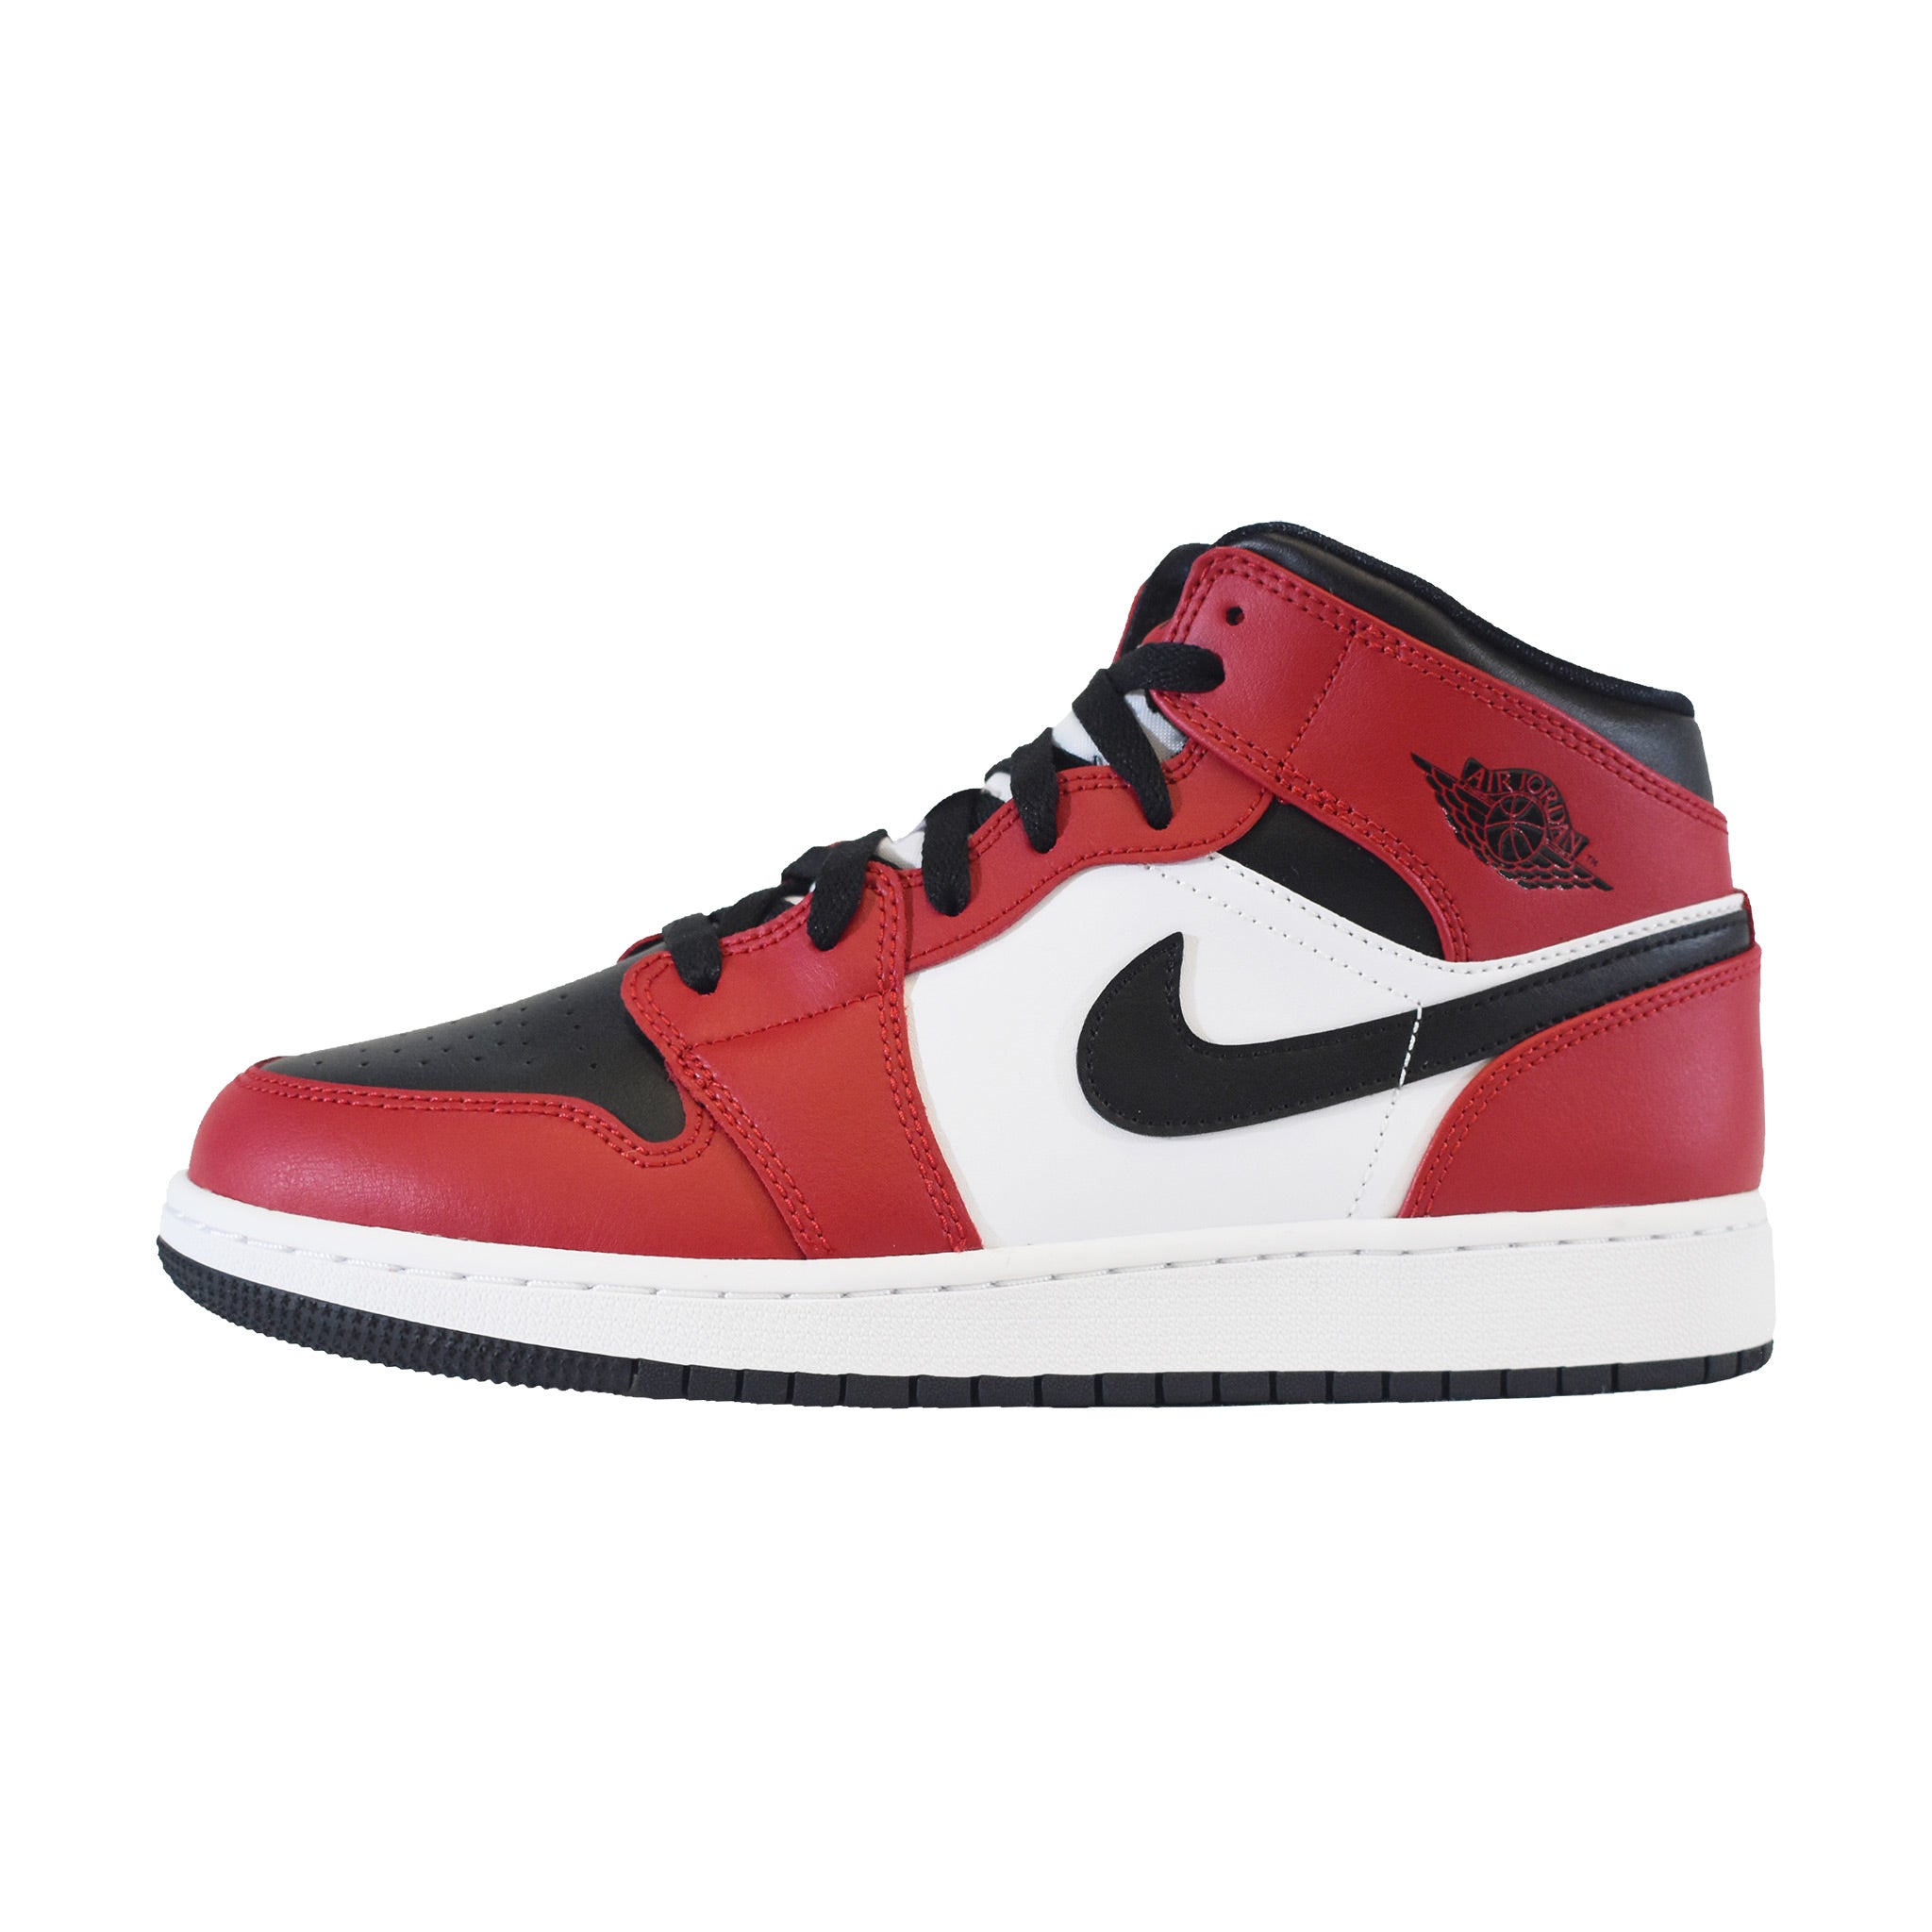 Nike Air Jordan 1 Mid - Chicago Black Toe | Points Streetwear Store ...